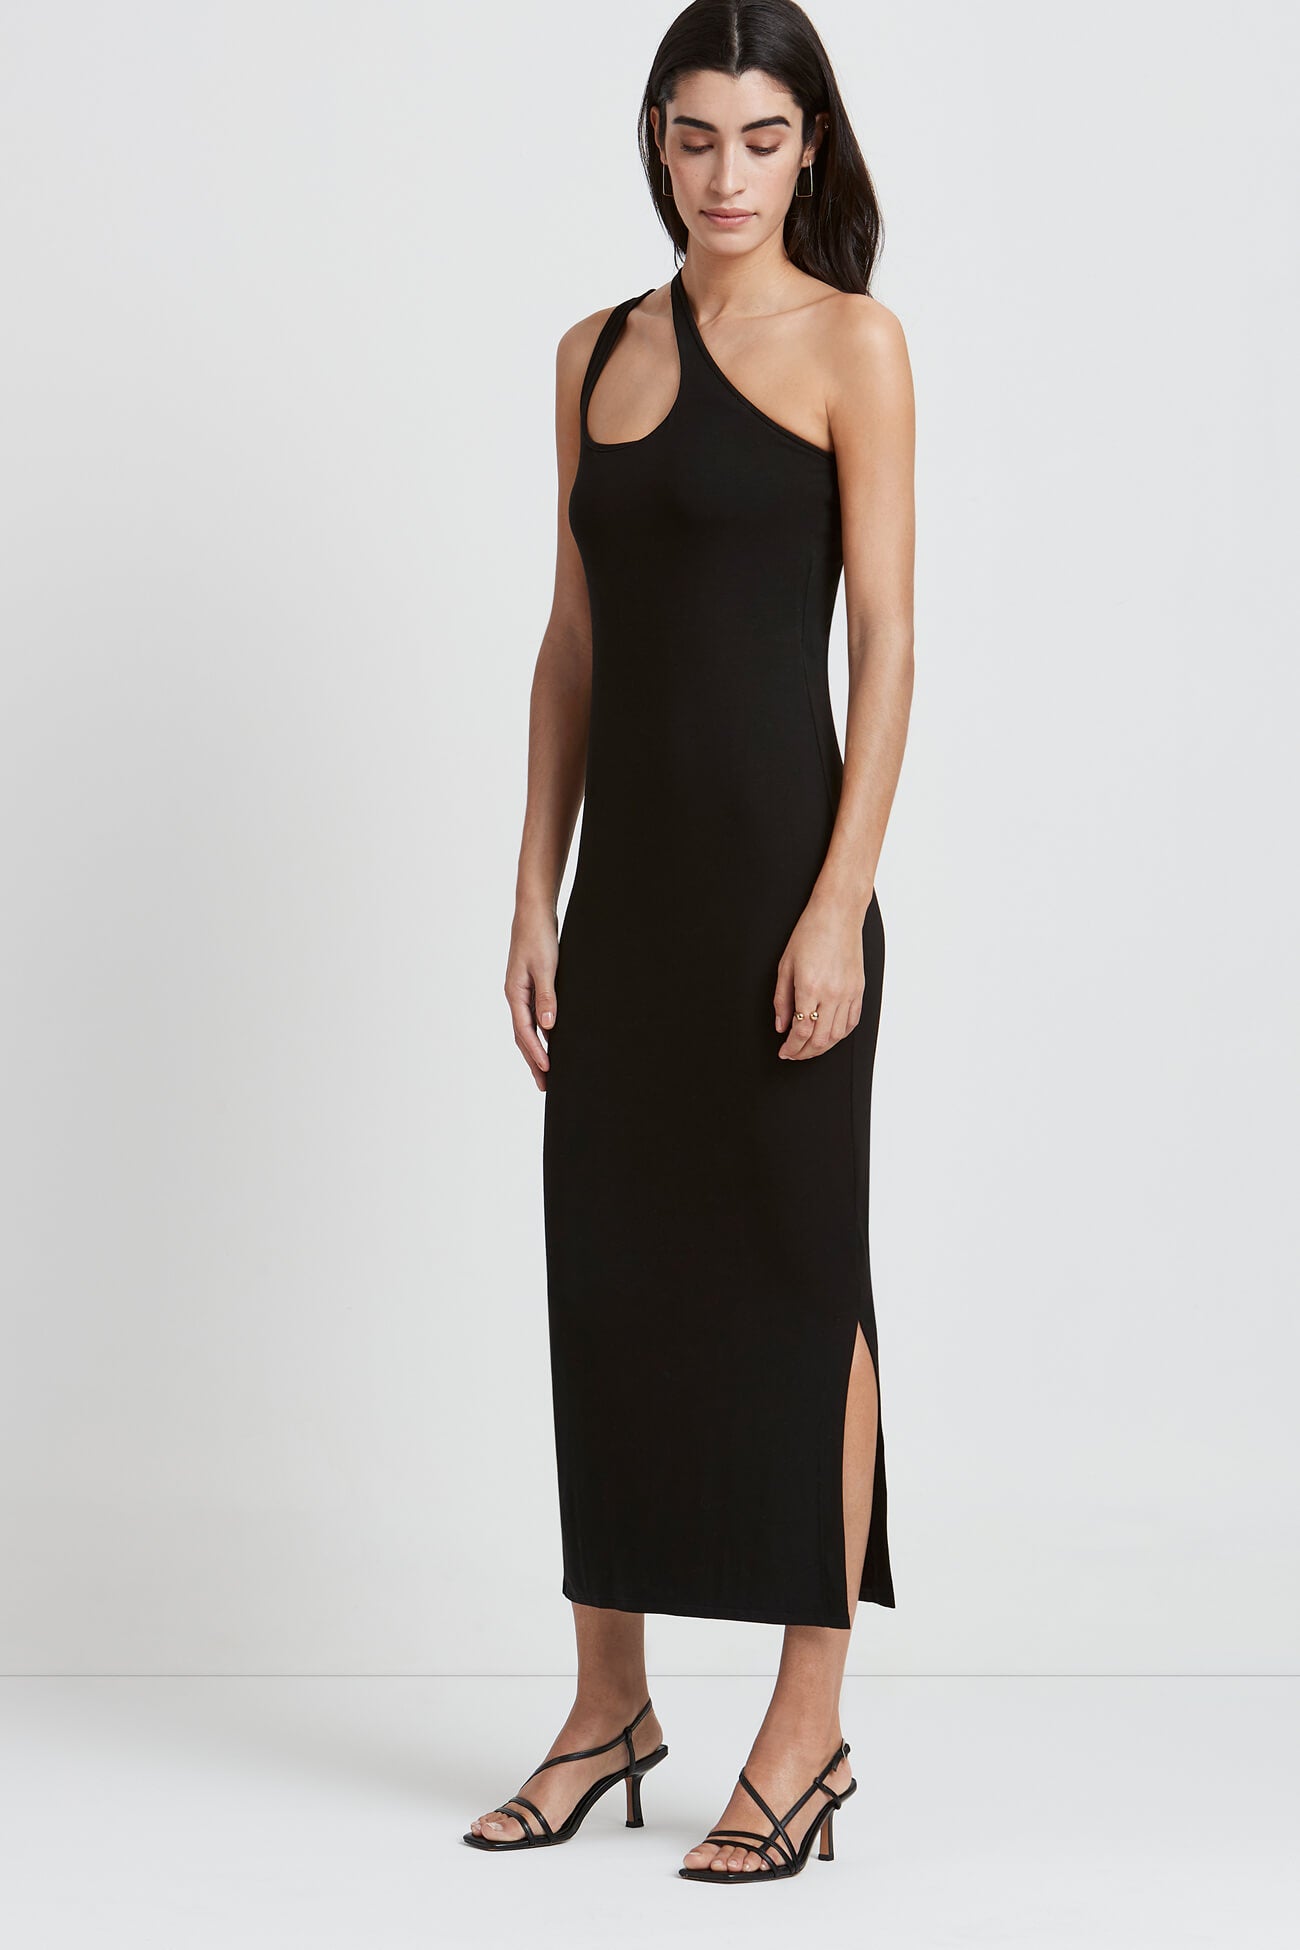 Black Evening Dress - Empire Dress | Marcella